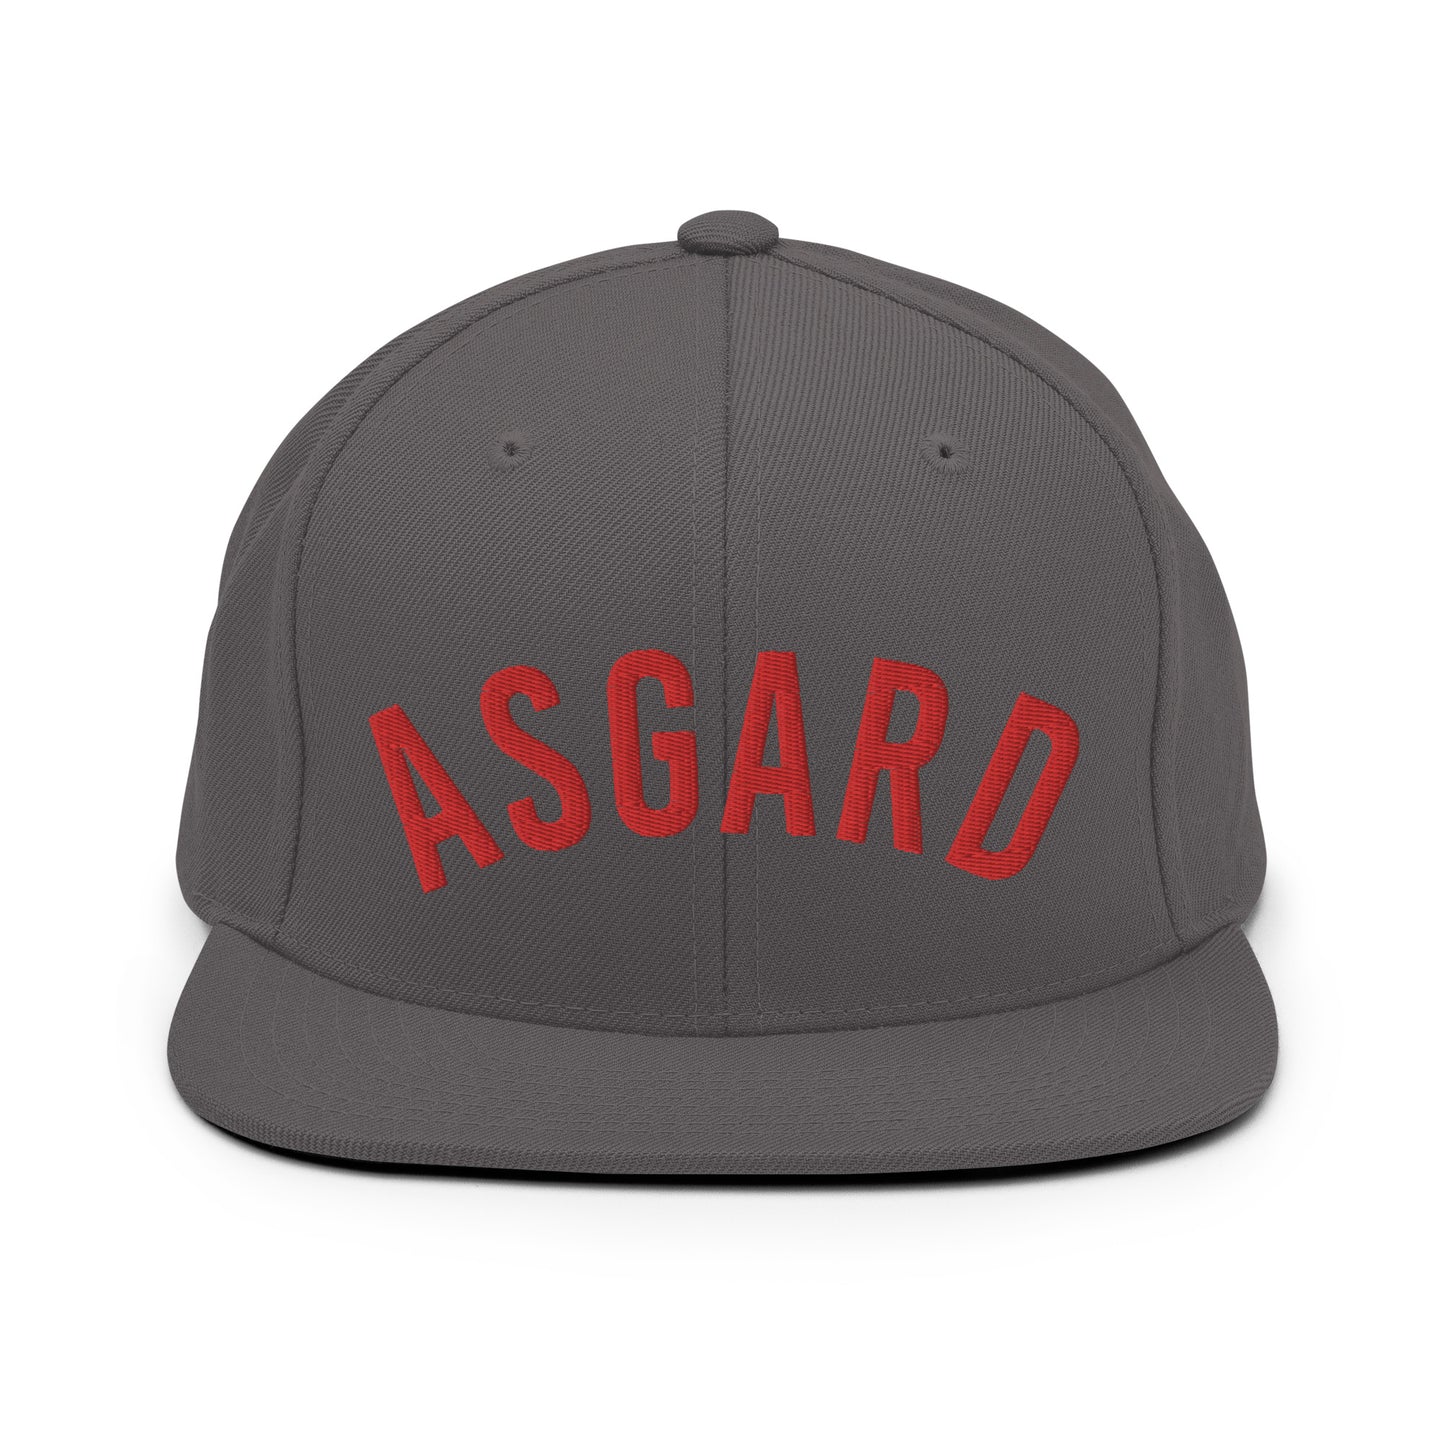 Asgard Home Team snapback hat